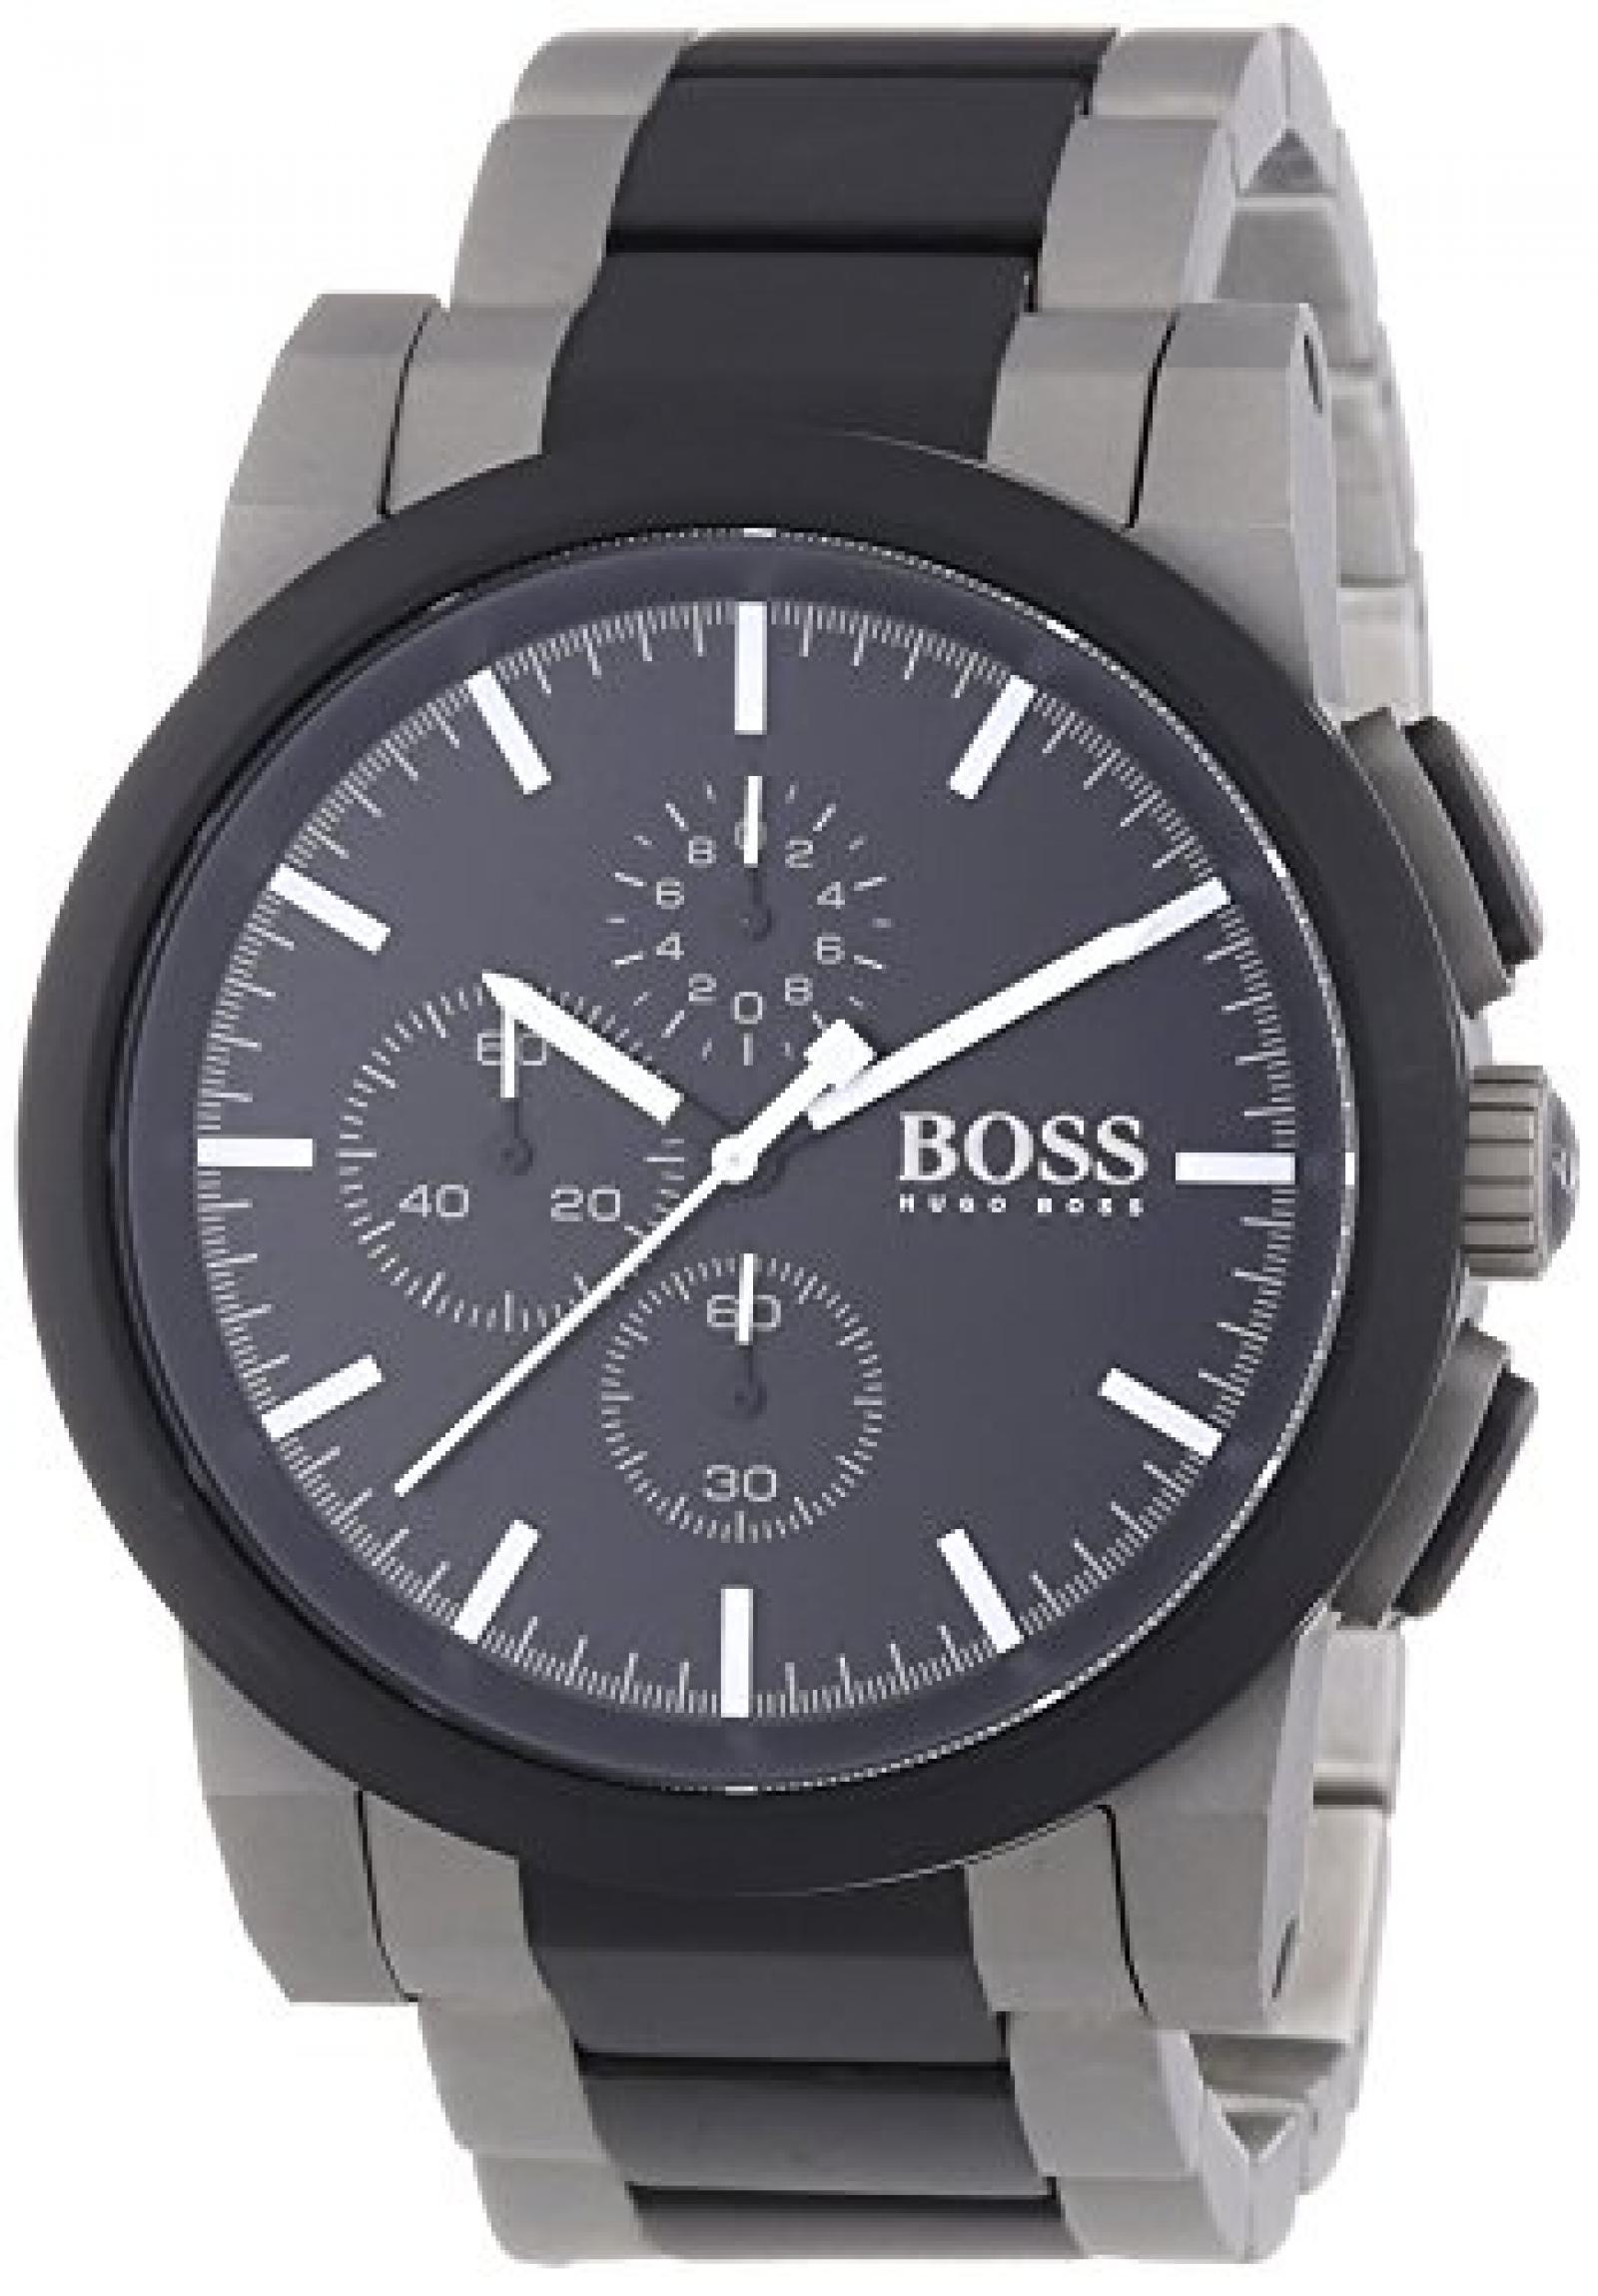 Hugo Boss Herren-Armbanduhr XL NEO Chronograph Quarz Edelstahl 1512958 